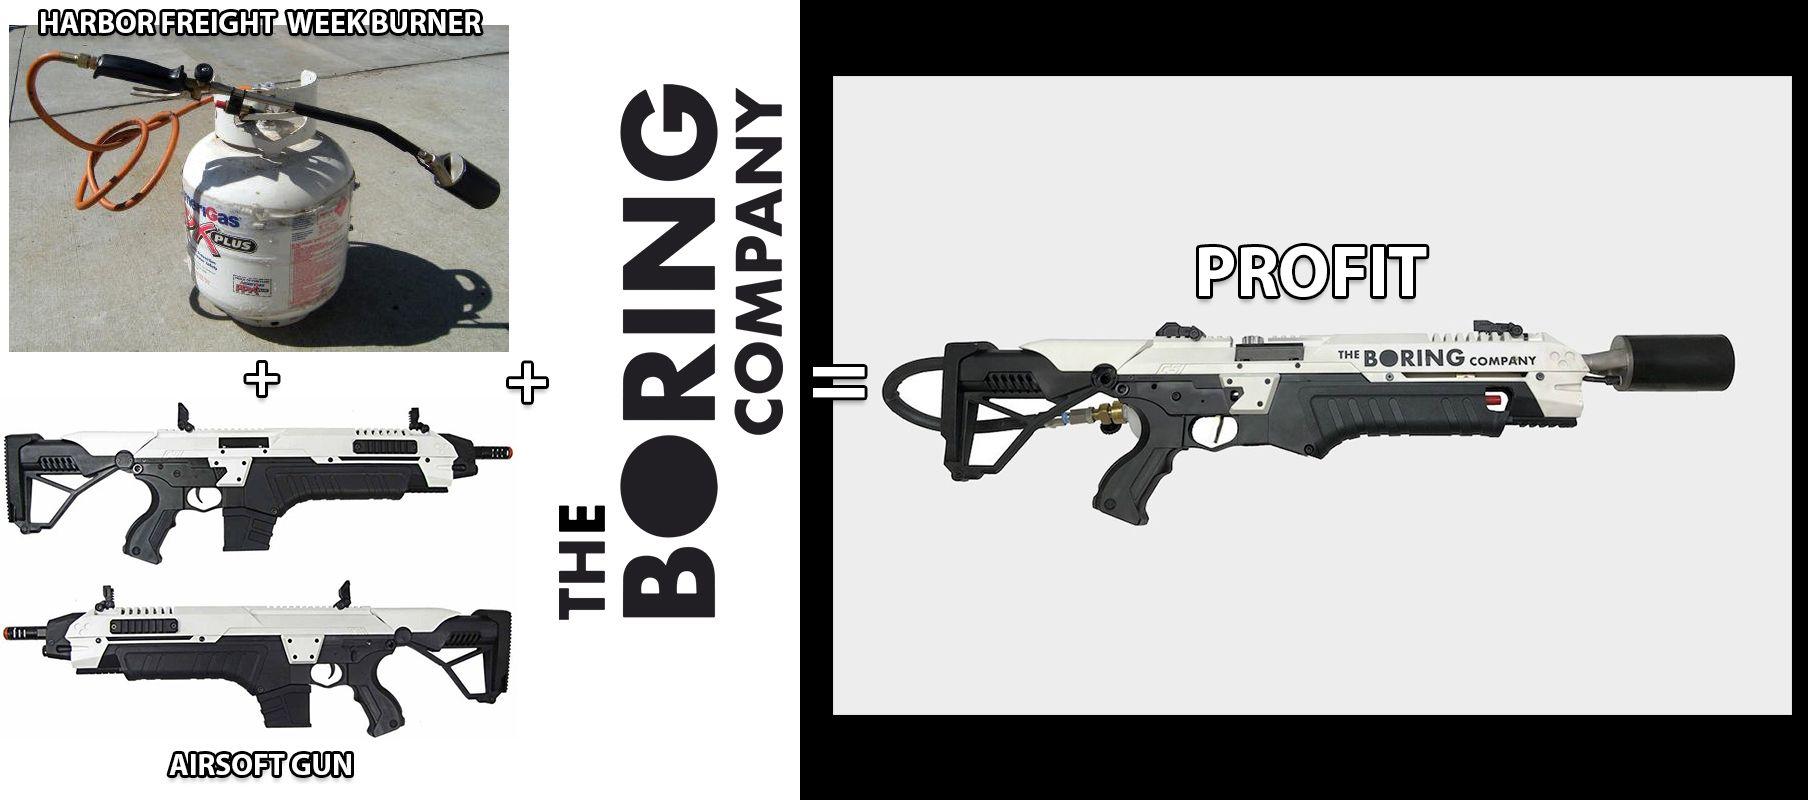 Gun Company Logo - Boring Company Flame Thrower Explained: Harbor Freight Week Burner + ...